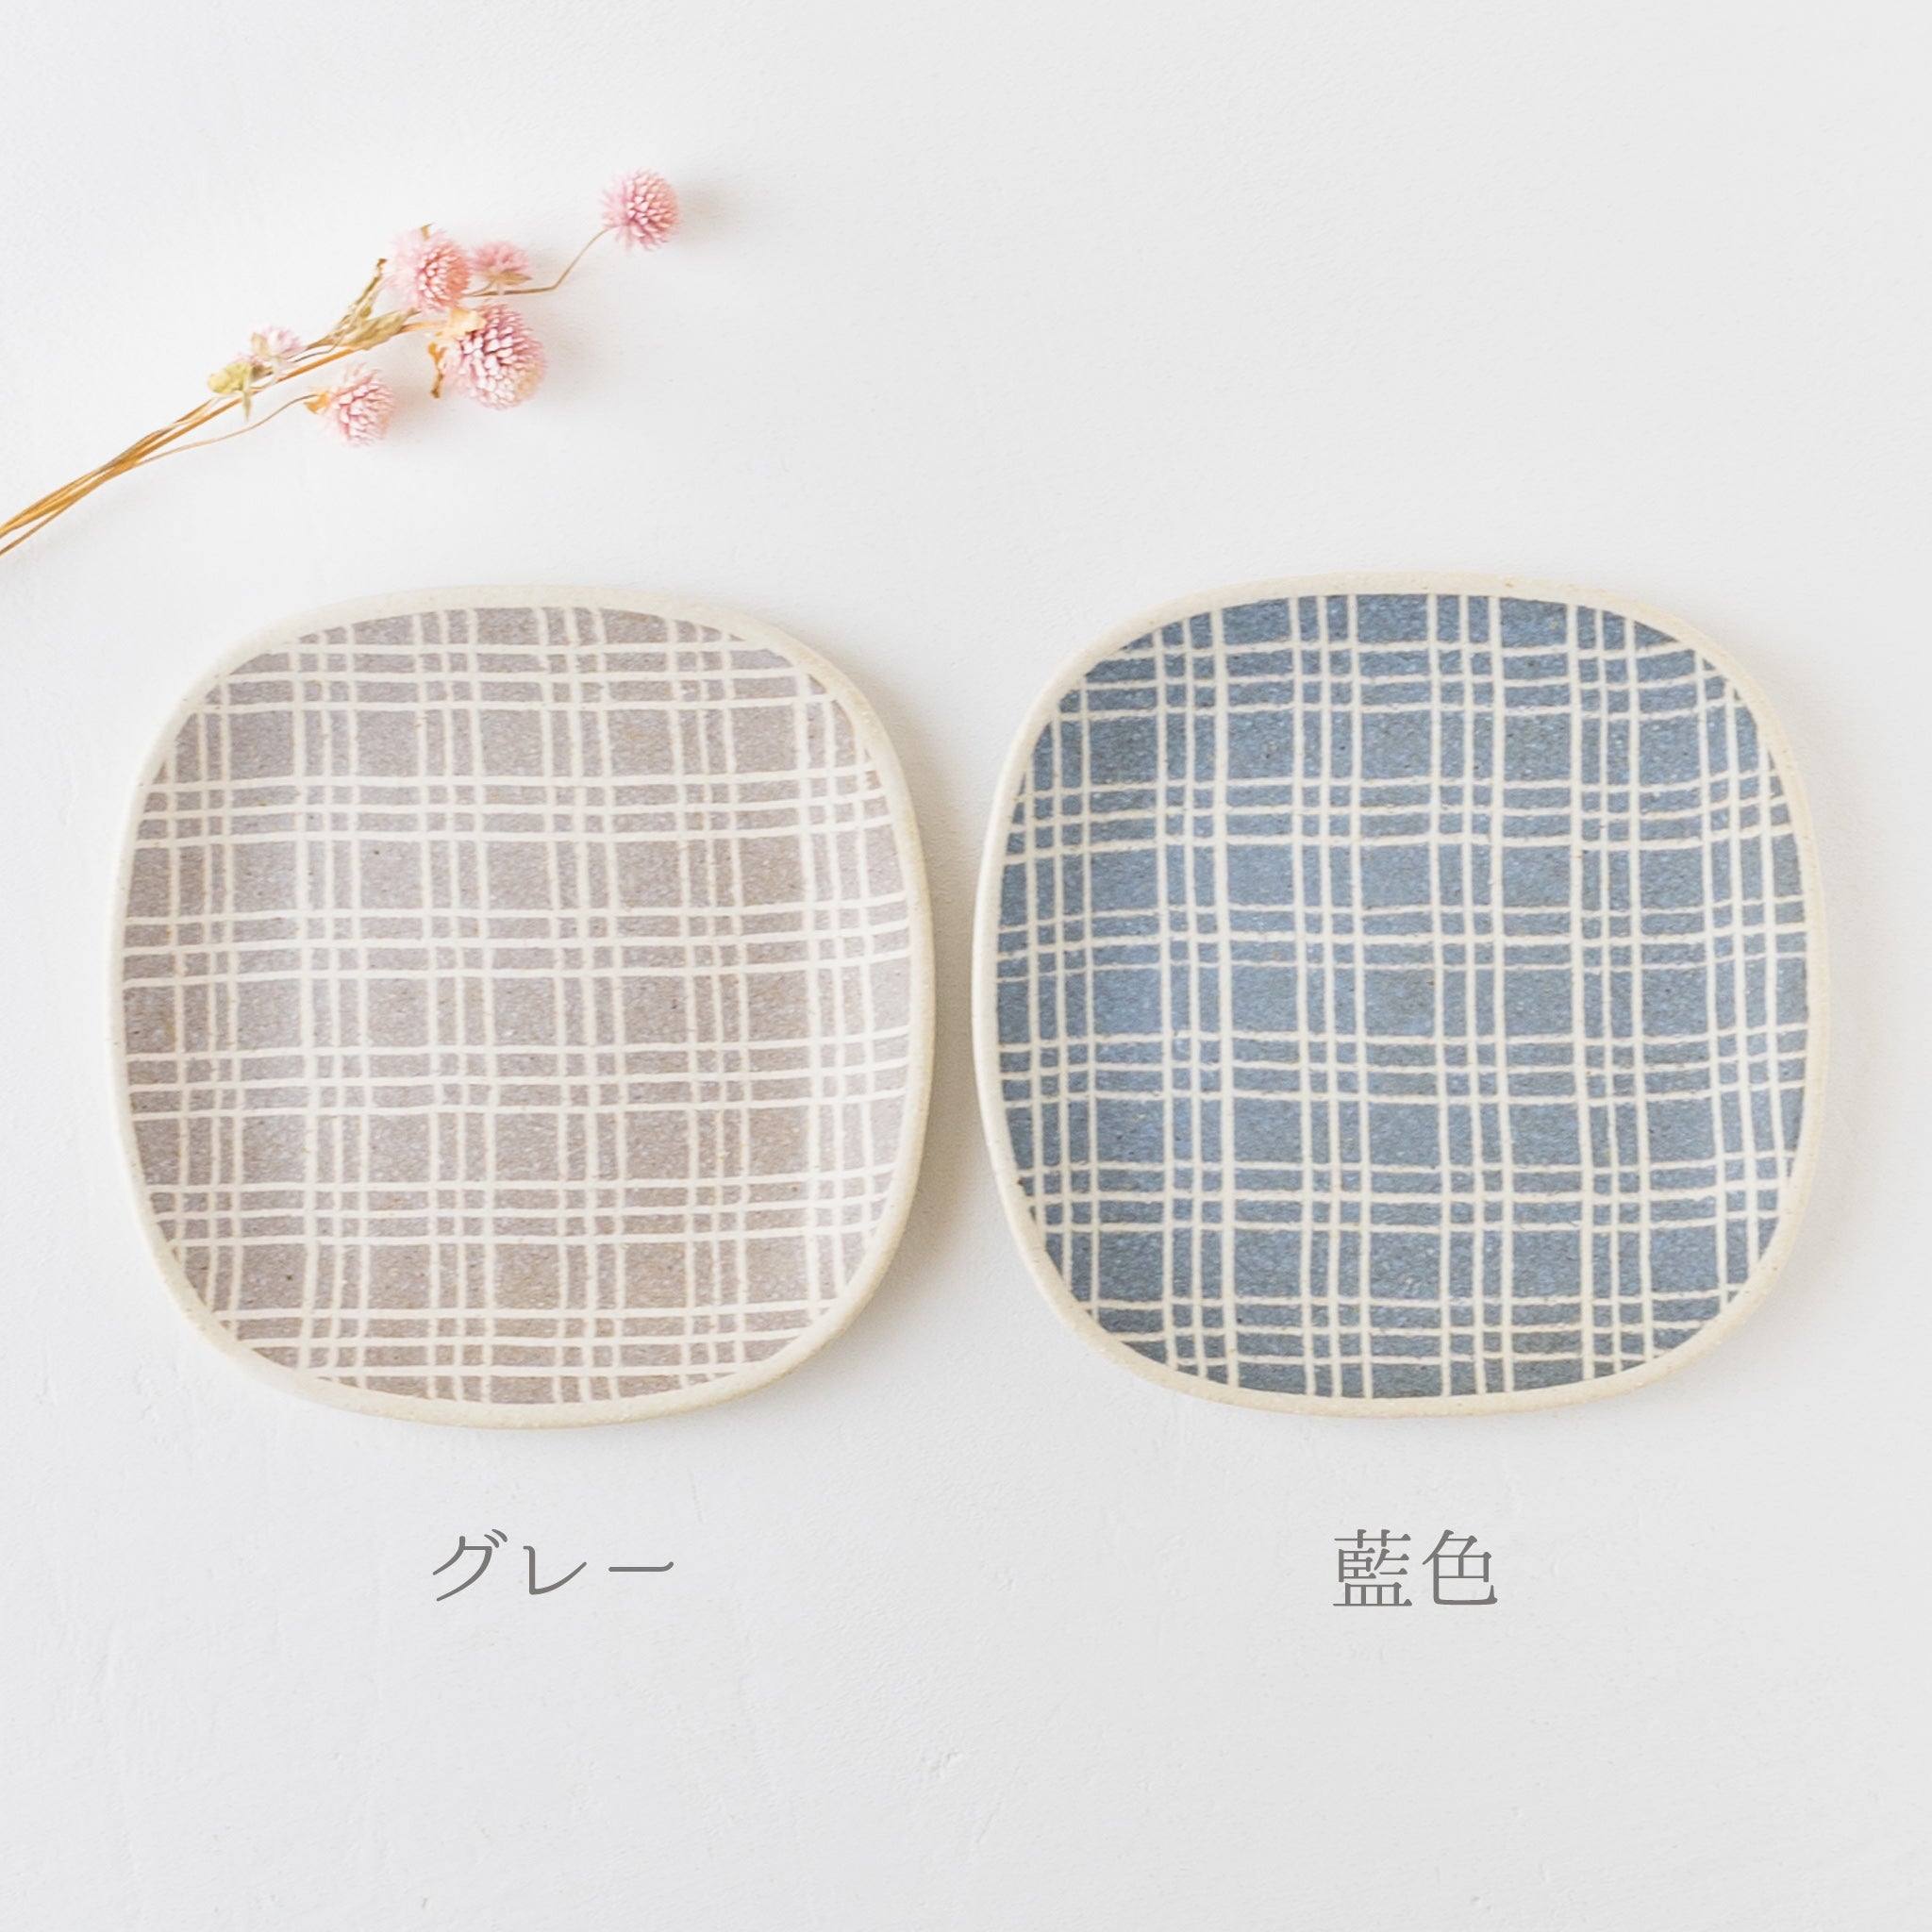 Hanako Sakashita cake plate with cute lattice pattern